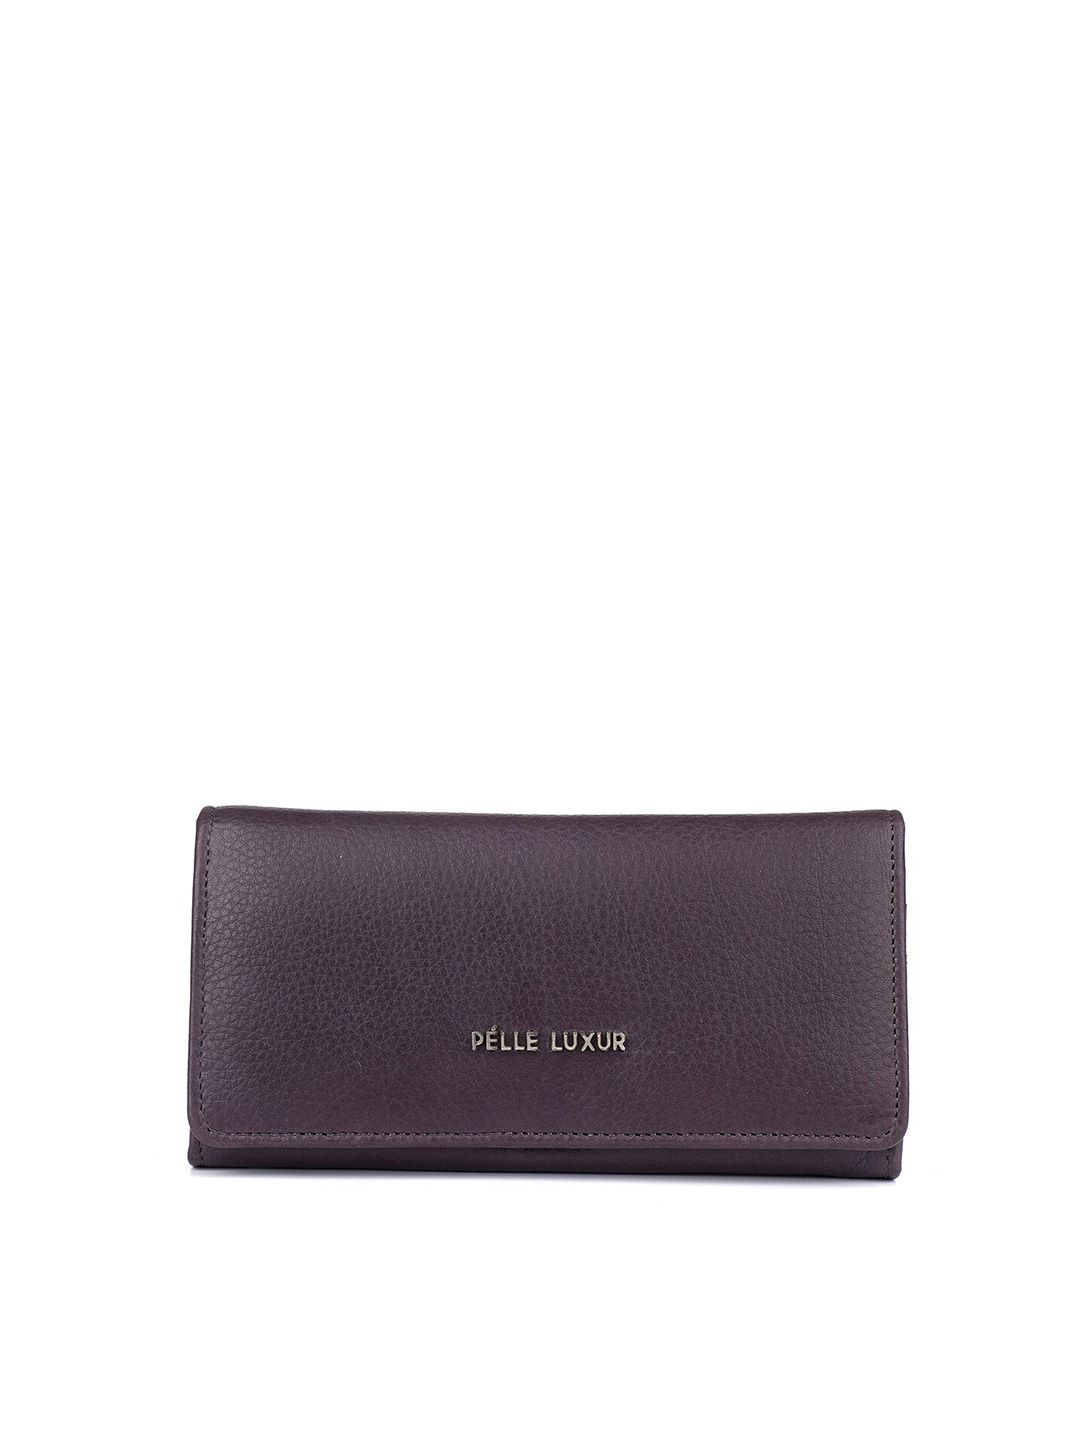 PELLE LUXUR Women Purple Leather Envelope Price in India